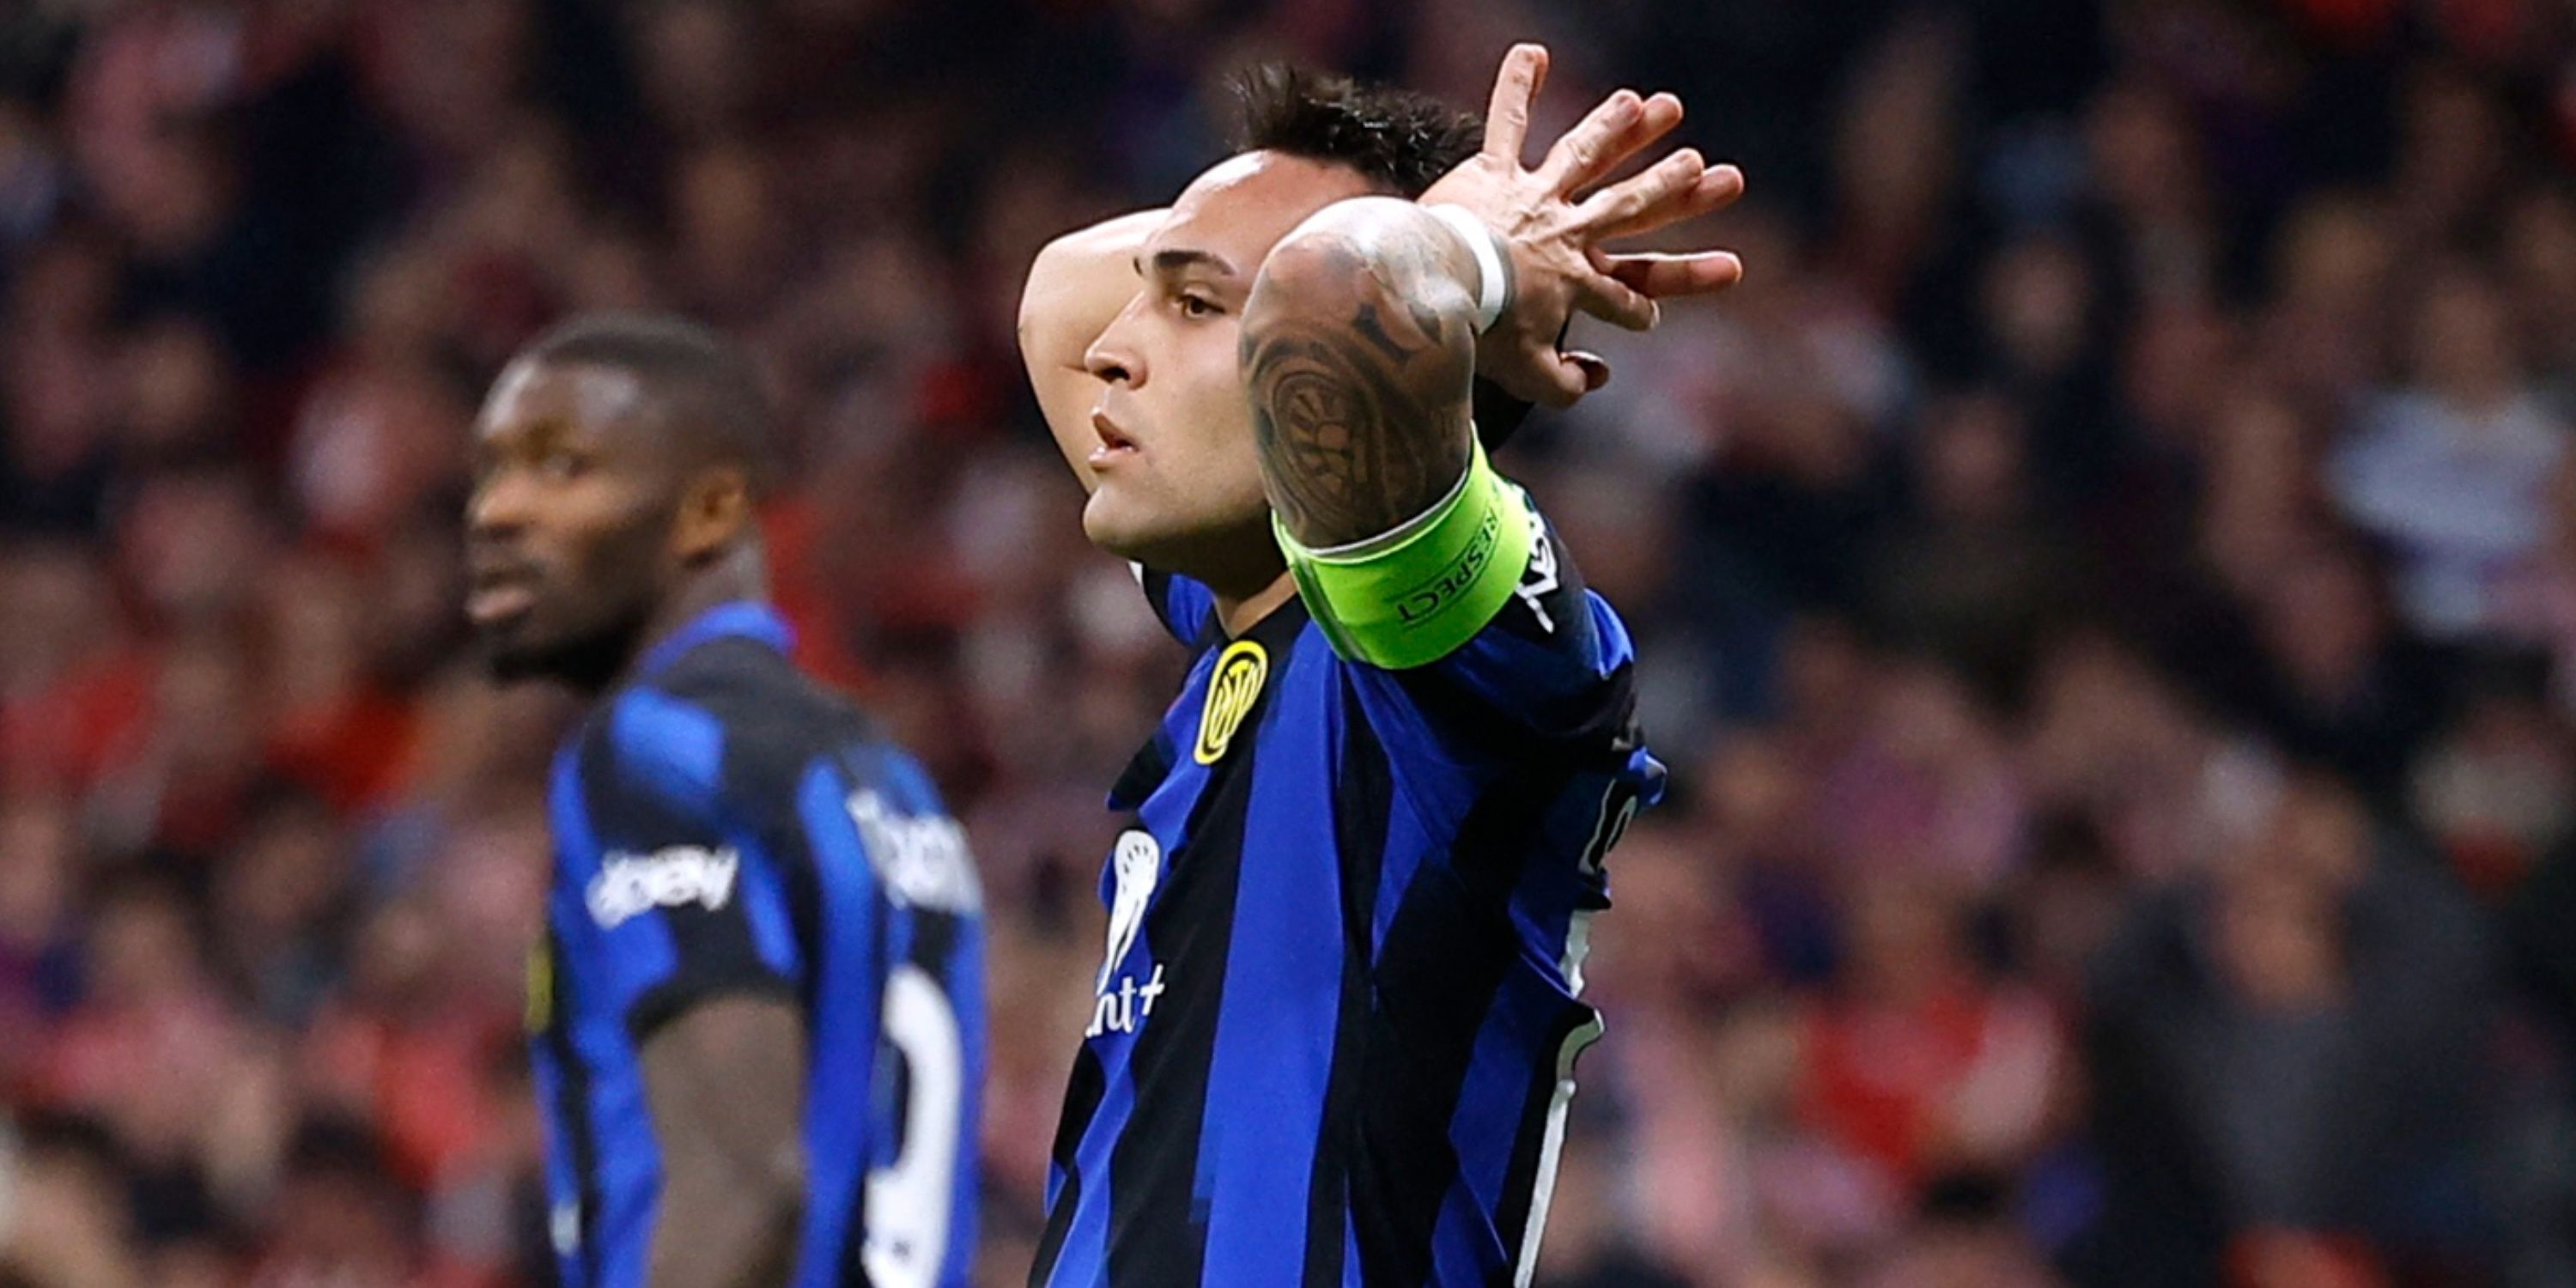 Inter Milan's Lautaro Martinez reacts after missing